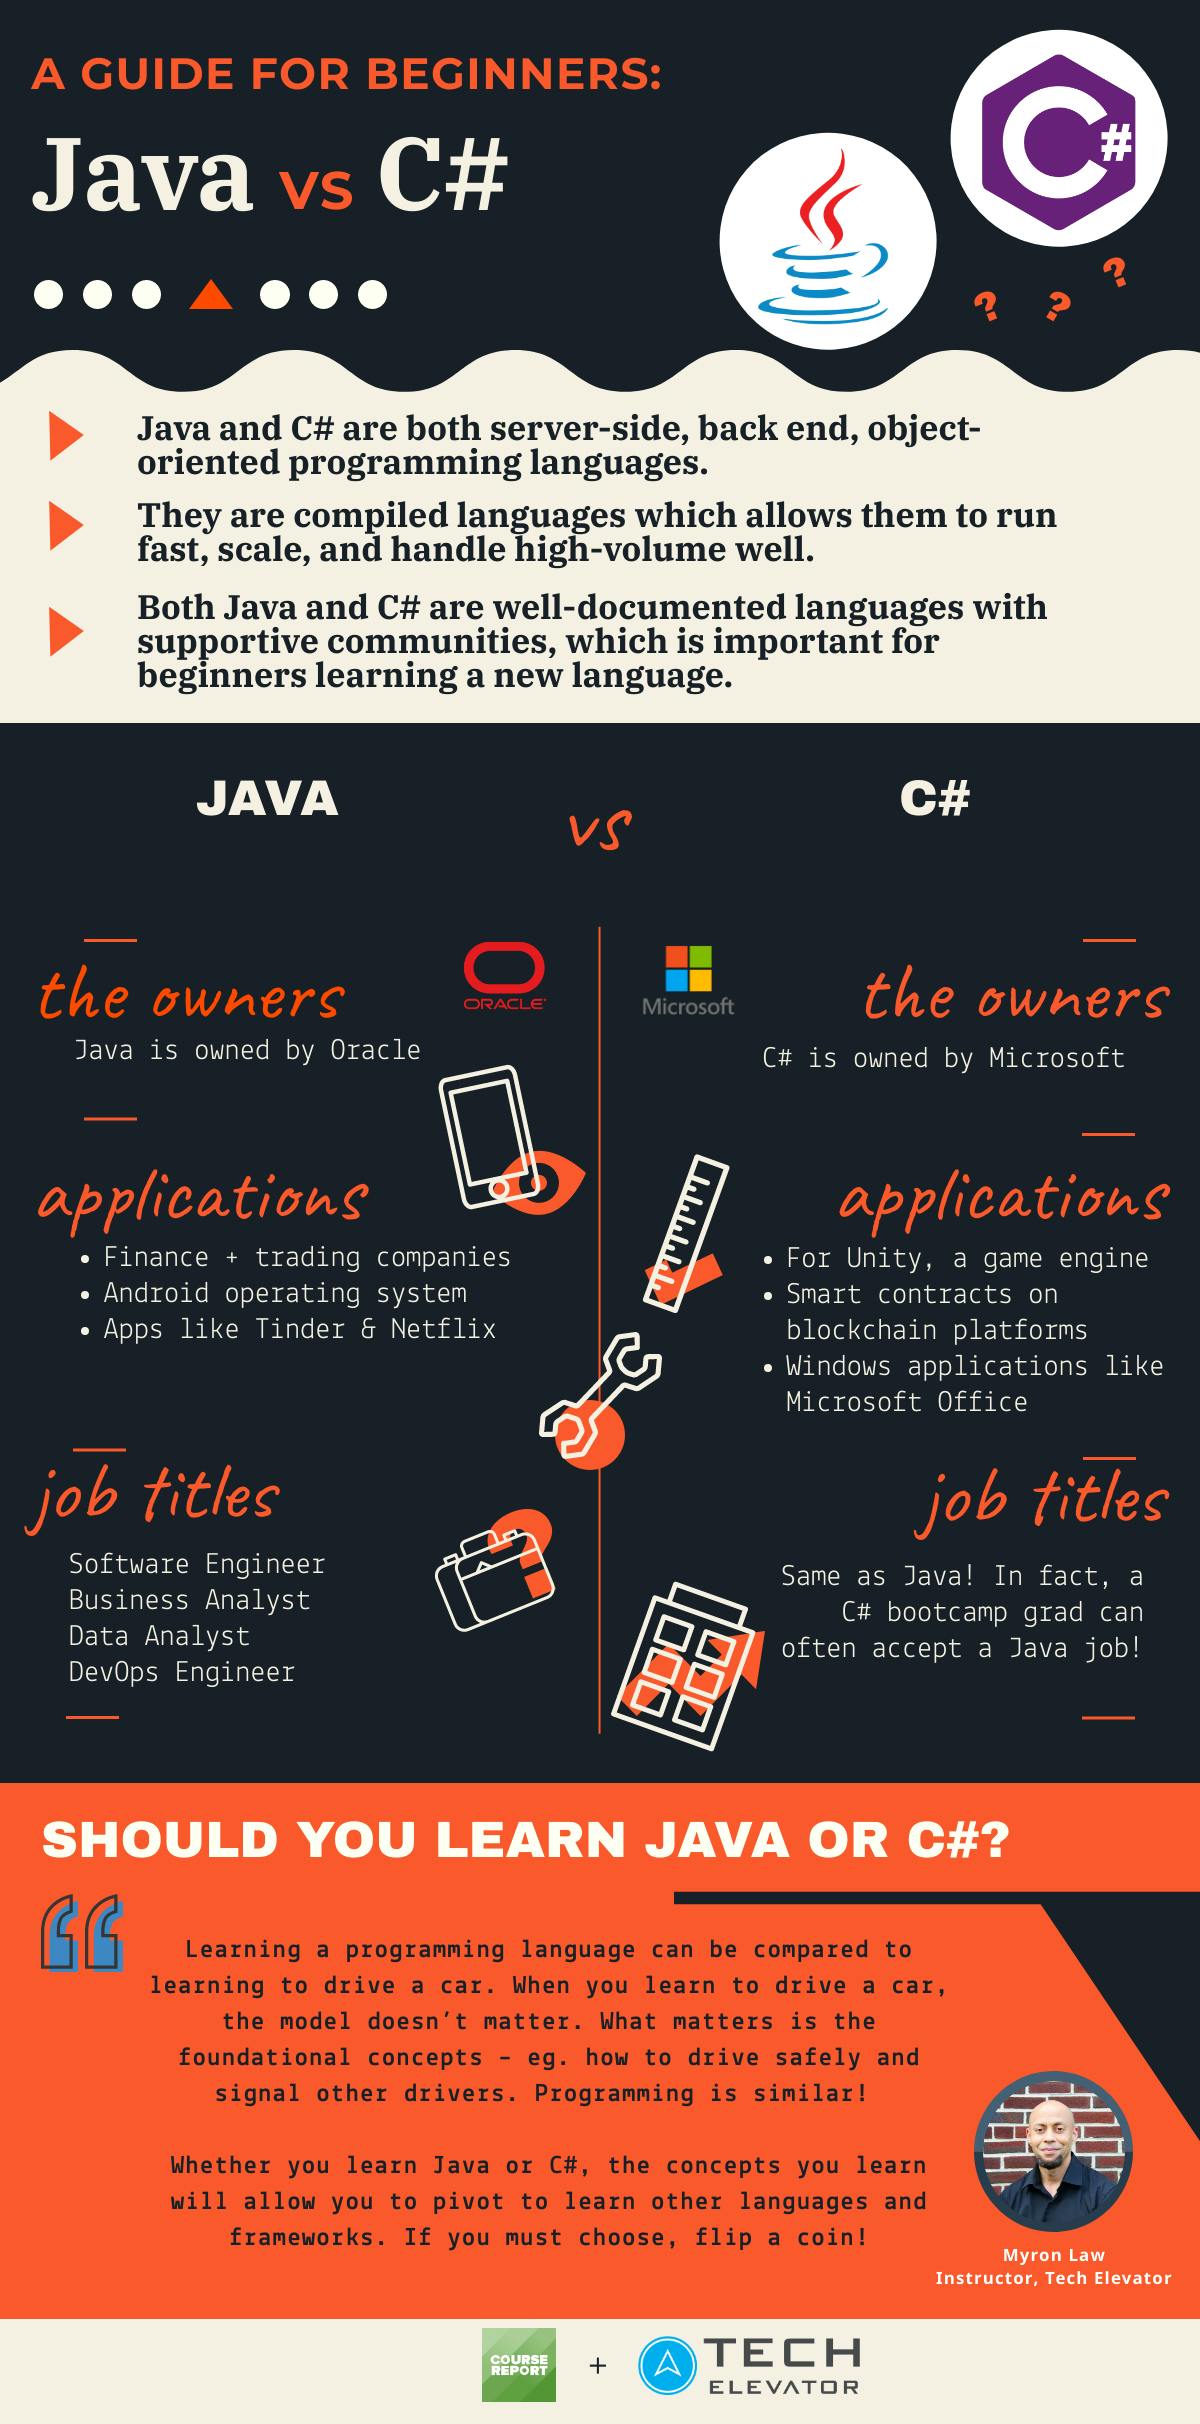 Is C# older than Java?